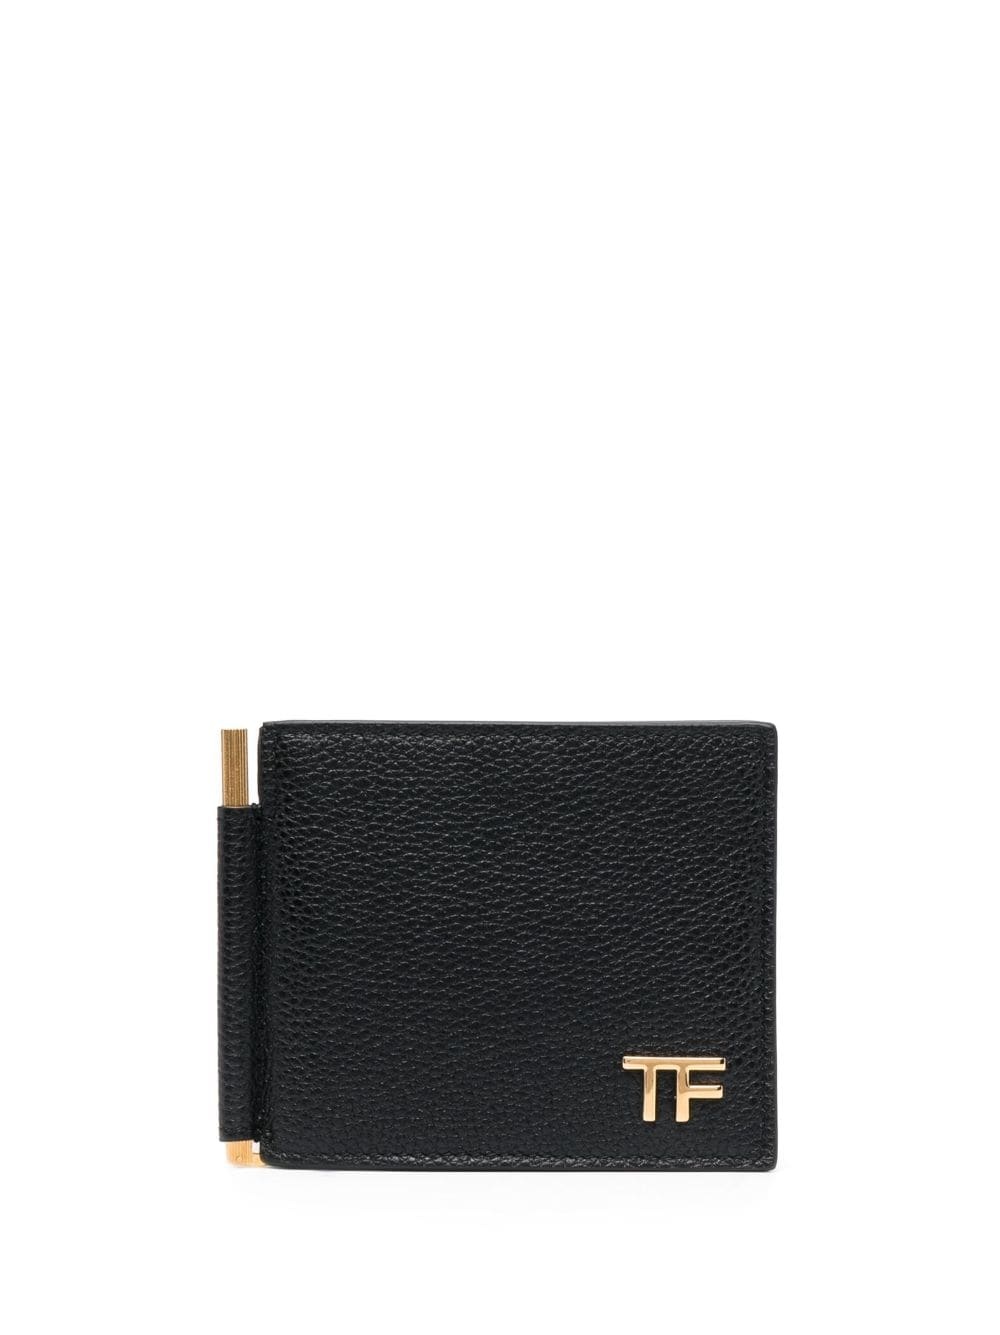 money clip leather wallet - 2